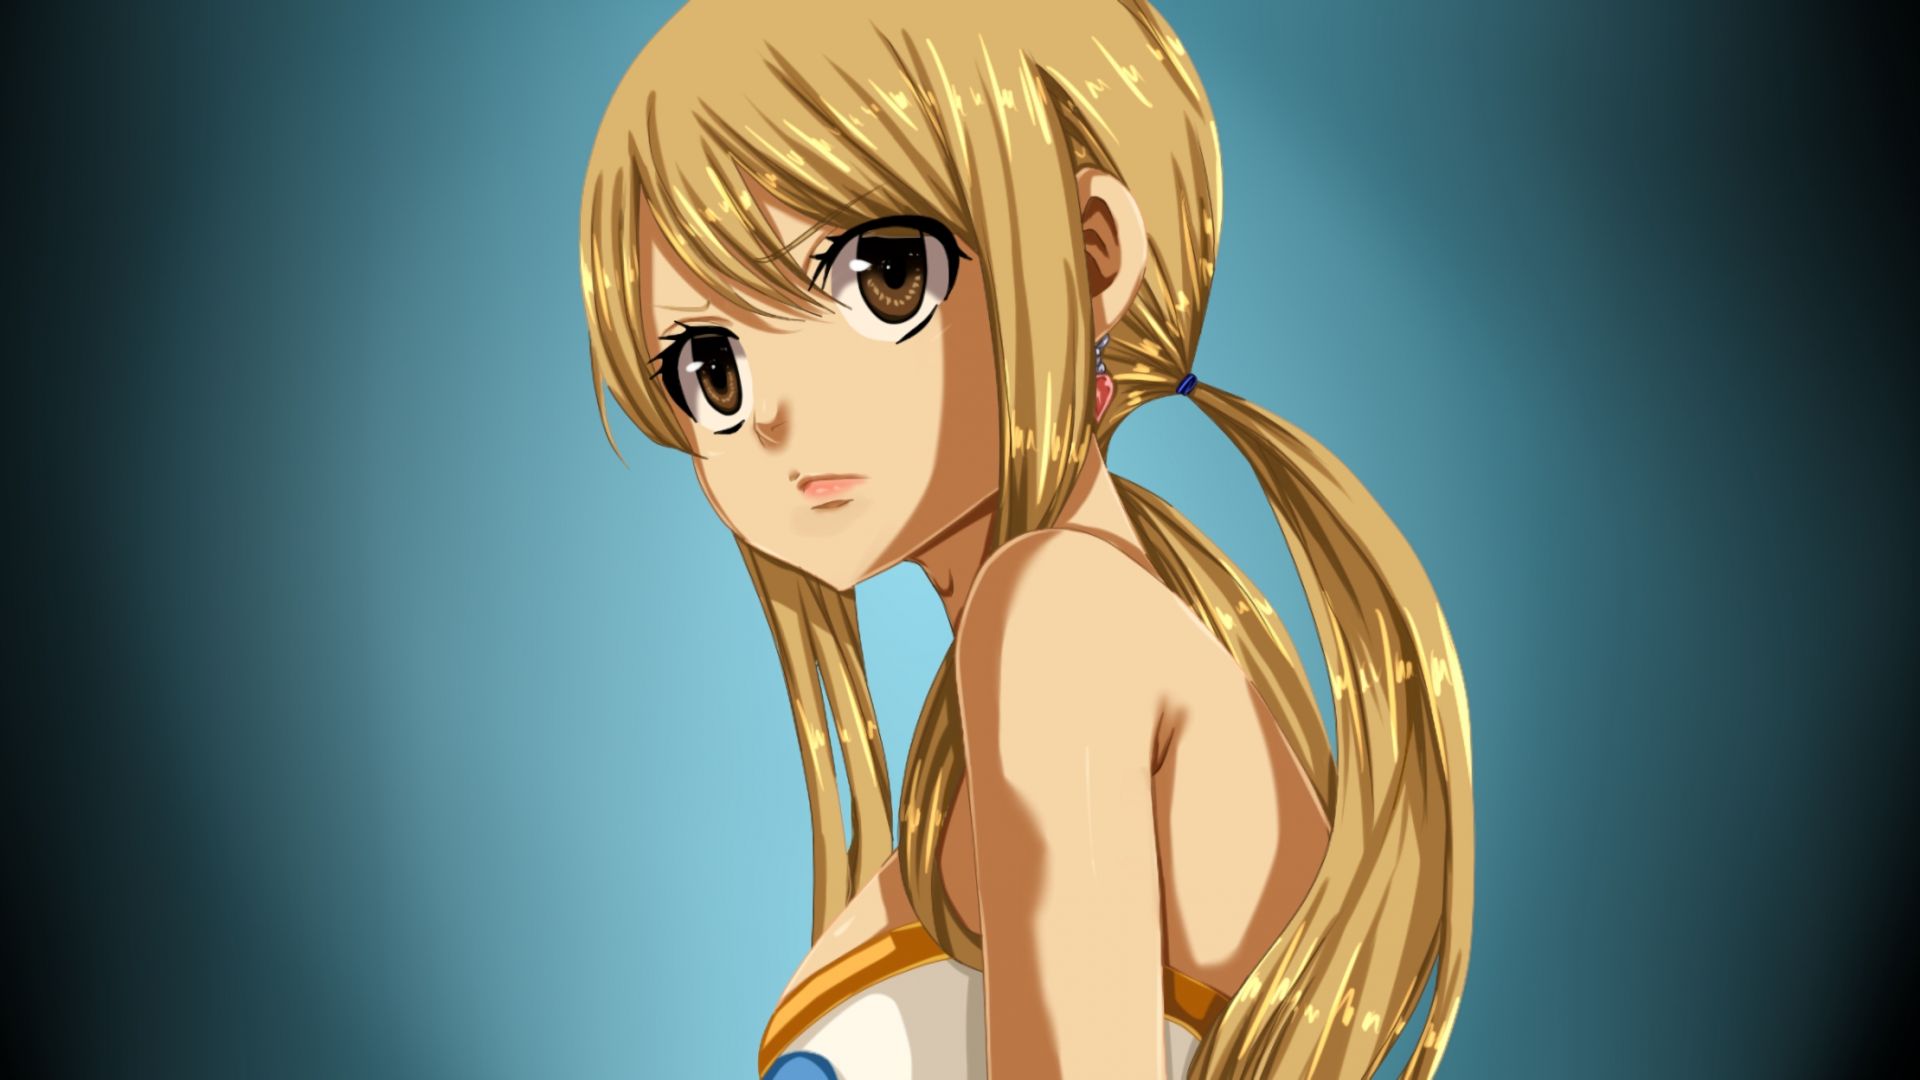 Wallpaper Lucy Heartfilia, Fairy Tail, blonde anime girl